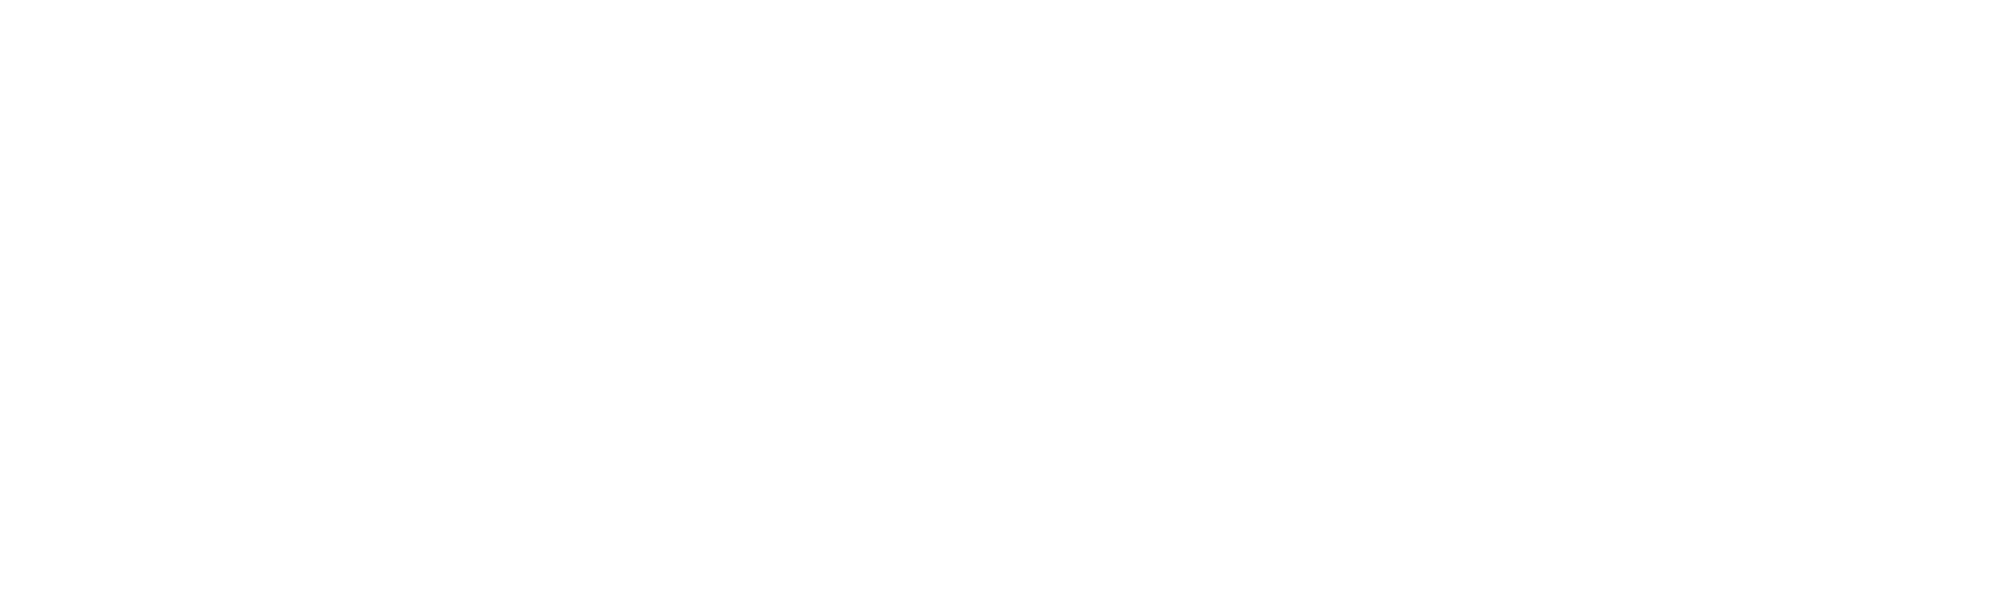 ScreenSoft logo